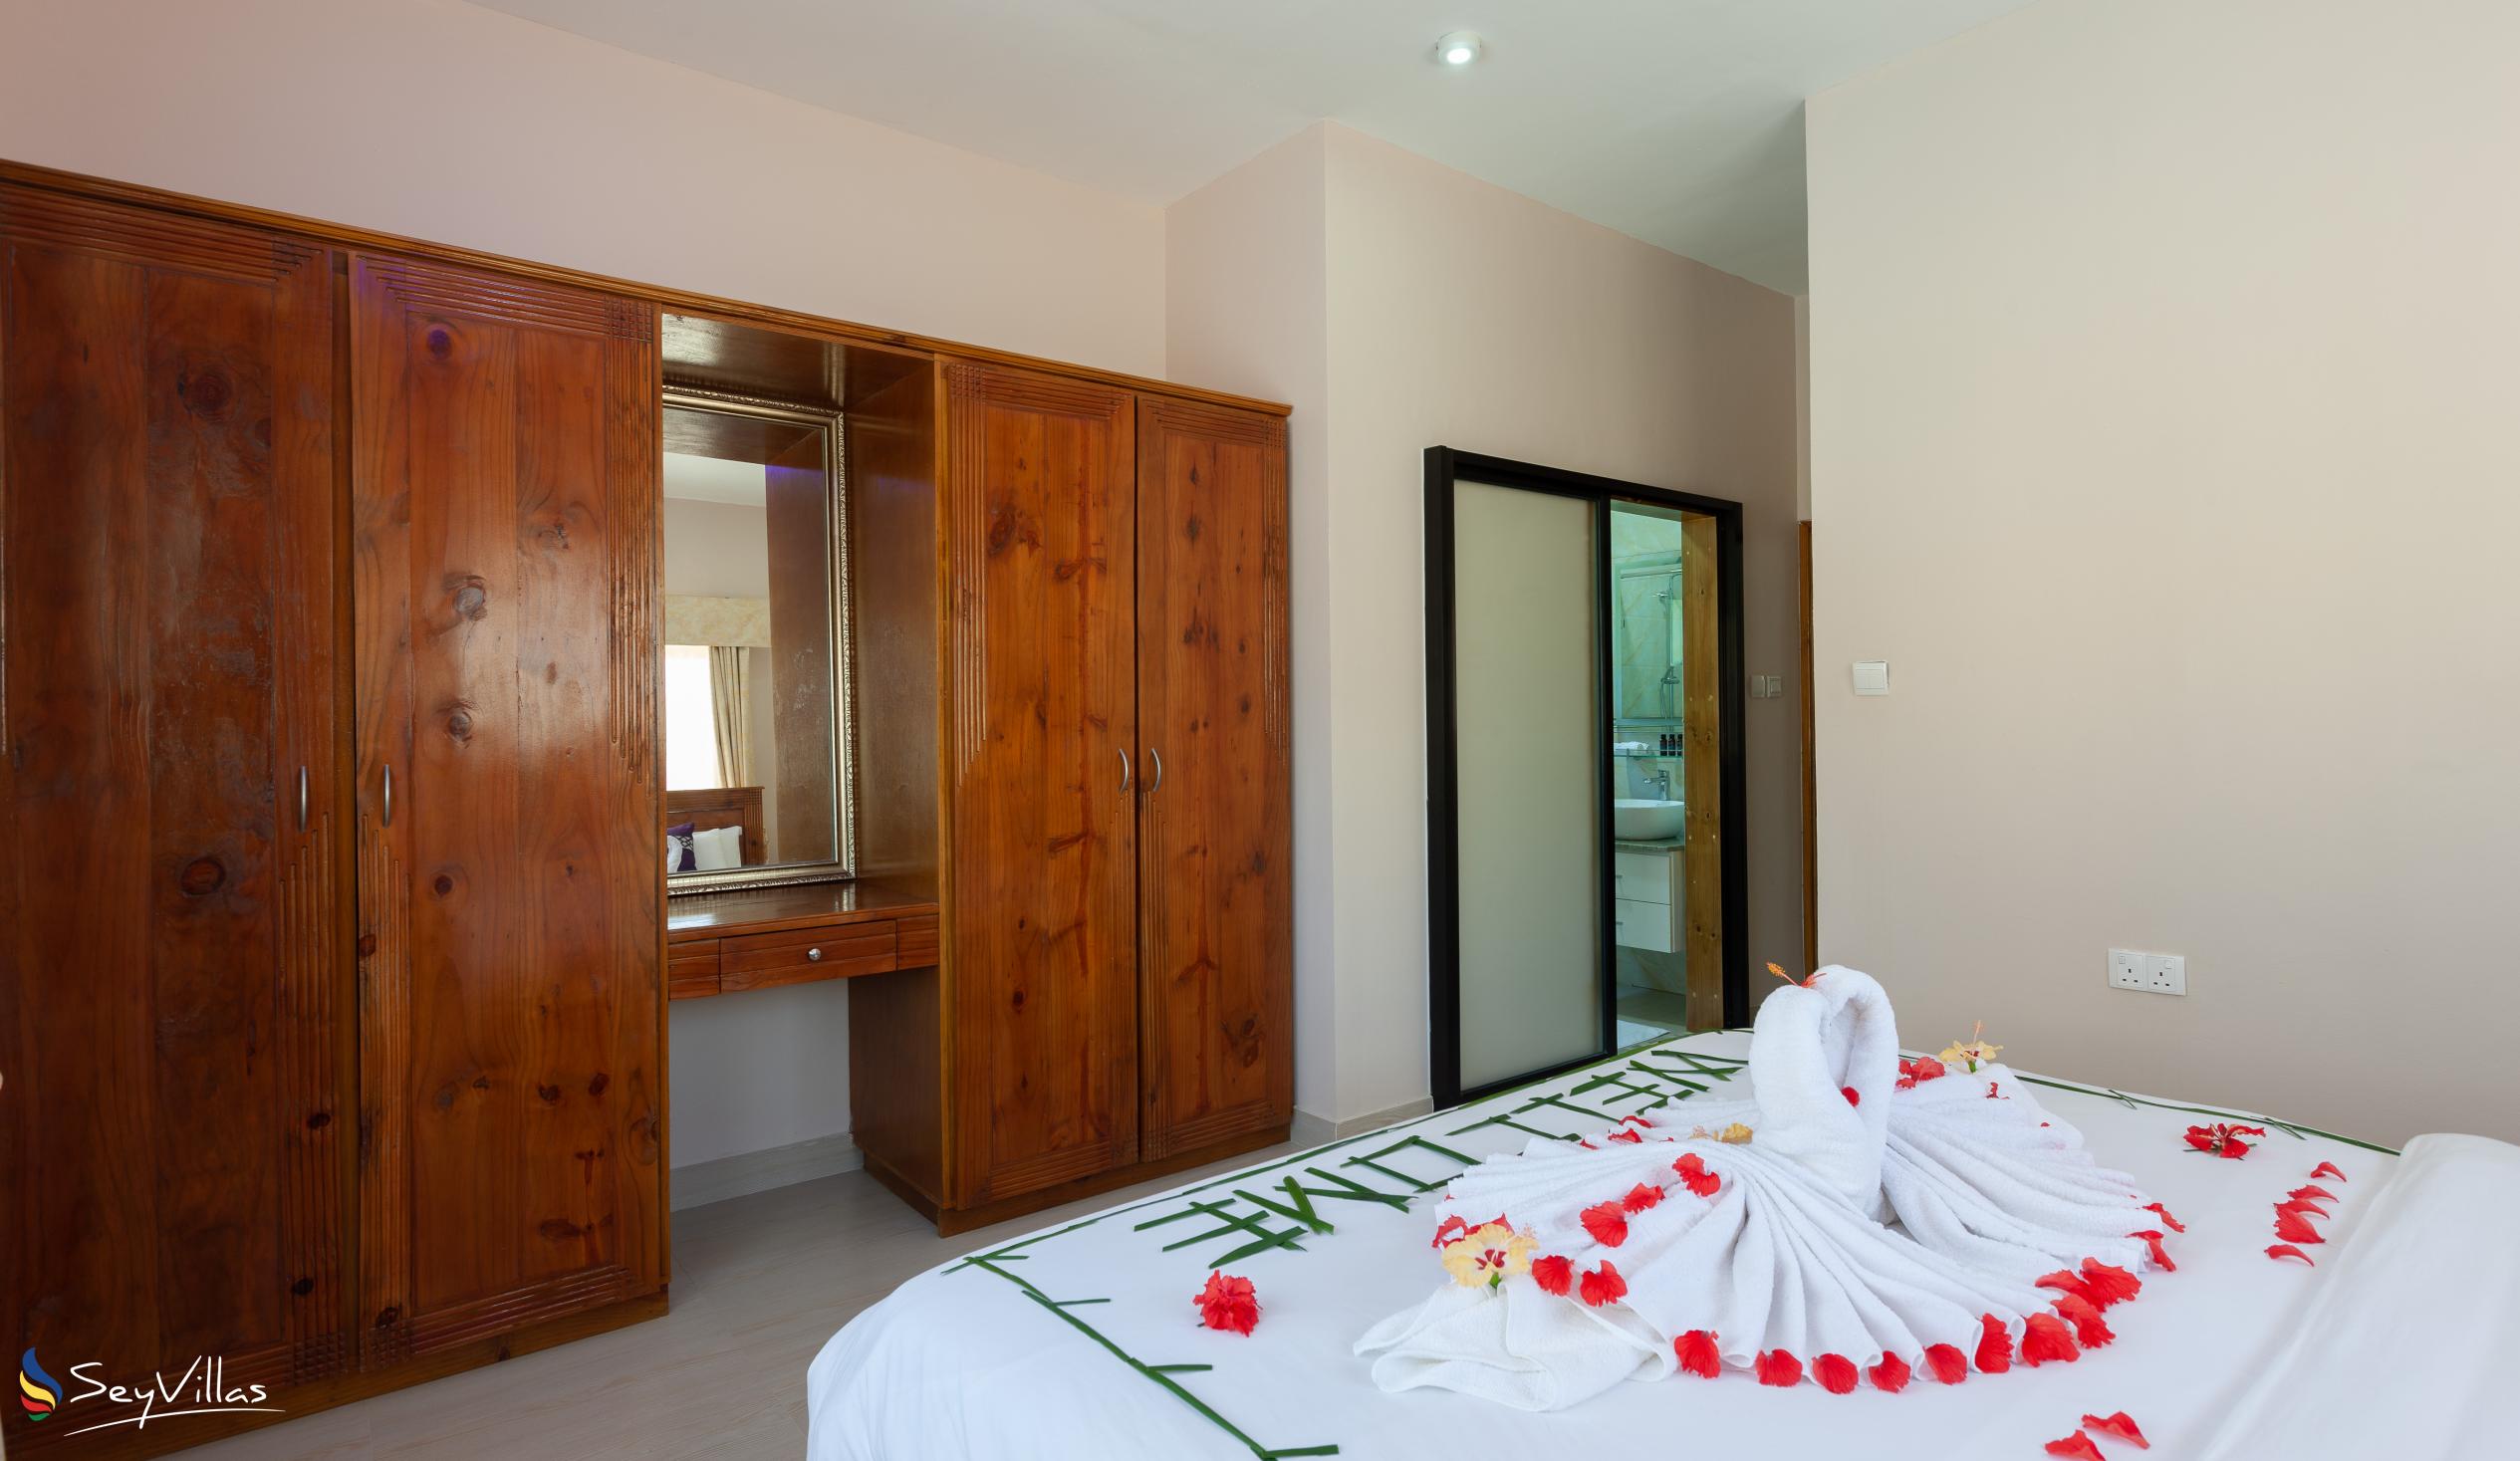 Photo 51: Stone Self Catering Apartments - 2-Bedroom Apartment - Praslin (Seychelles)